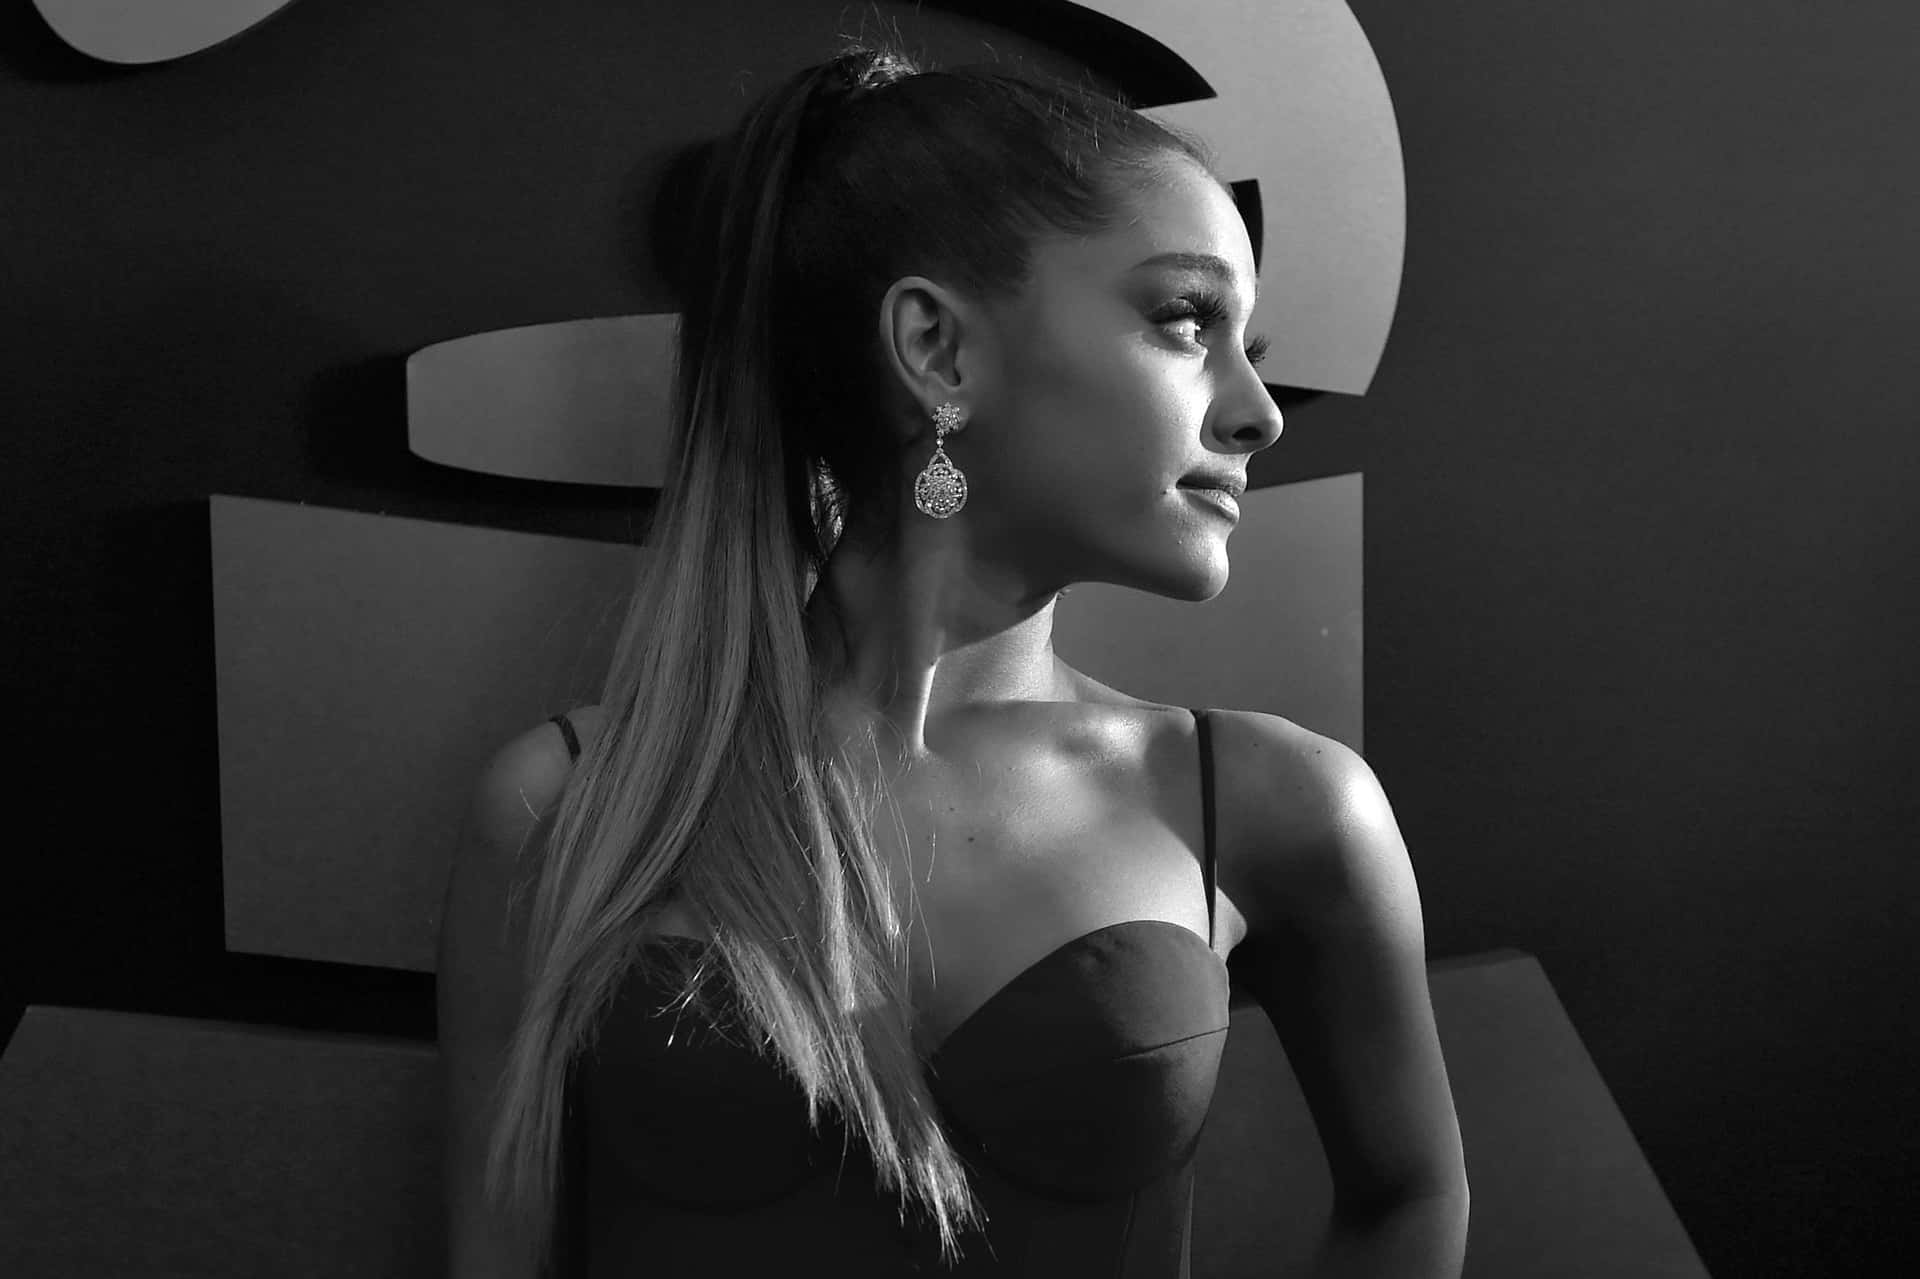 Ariana Grande looks beautiful in this portrait